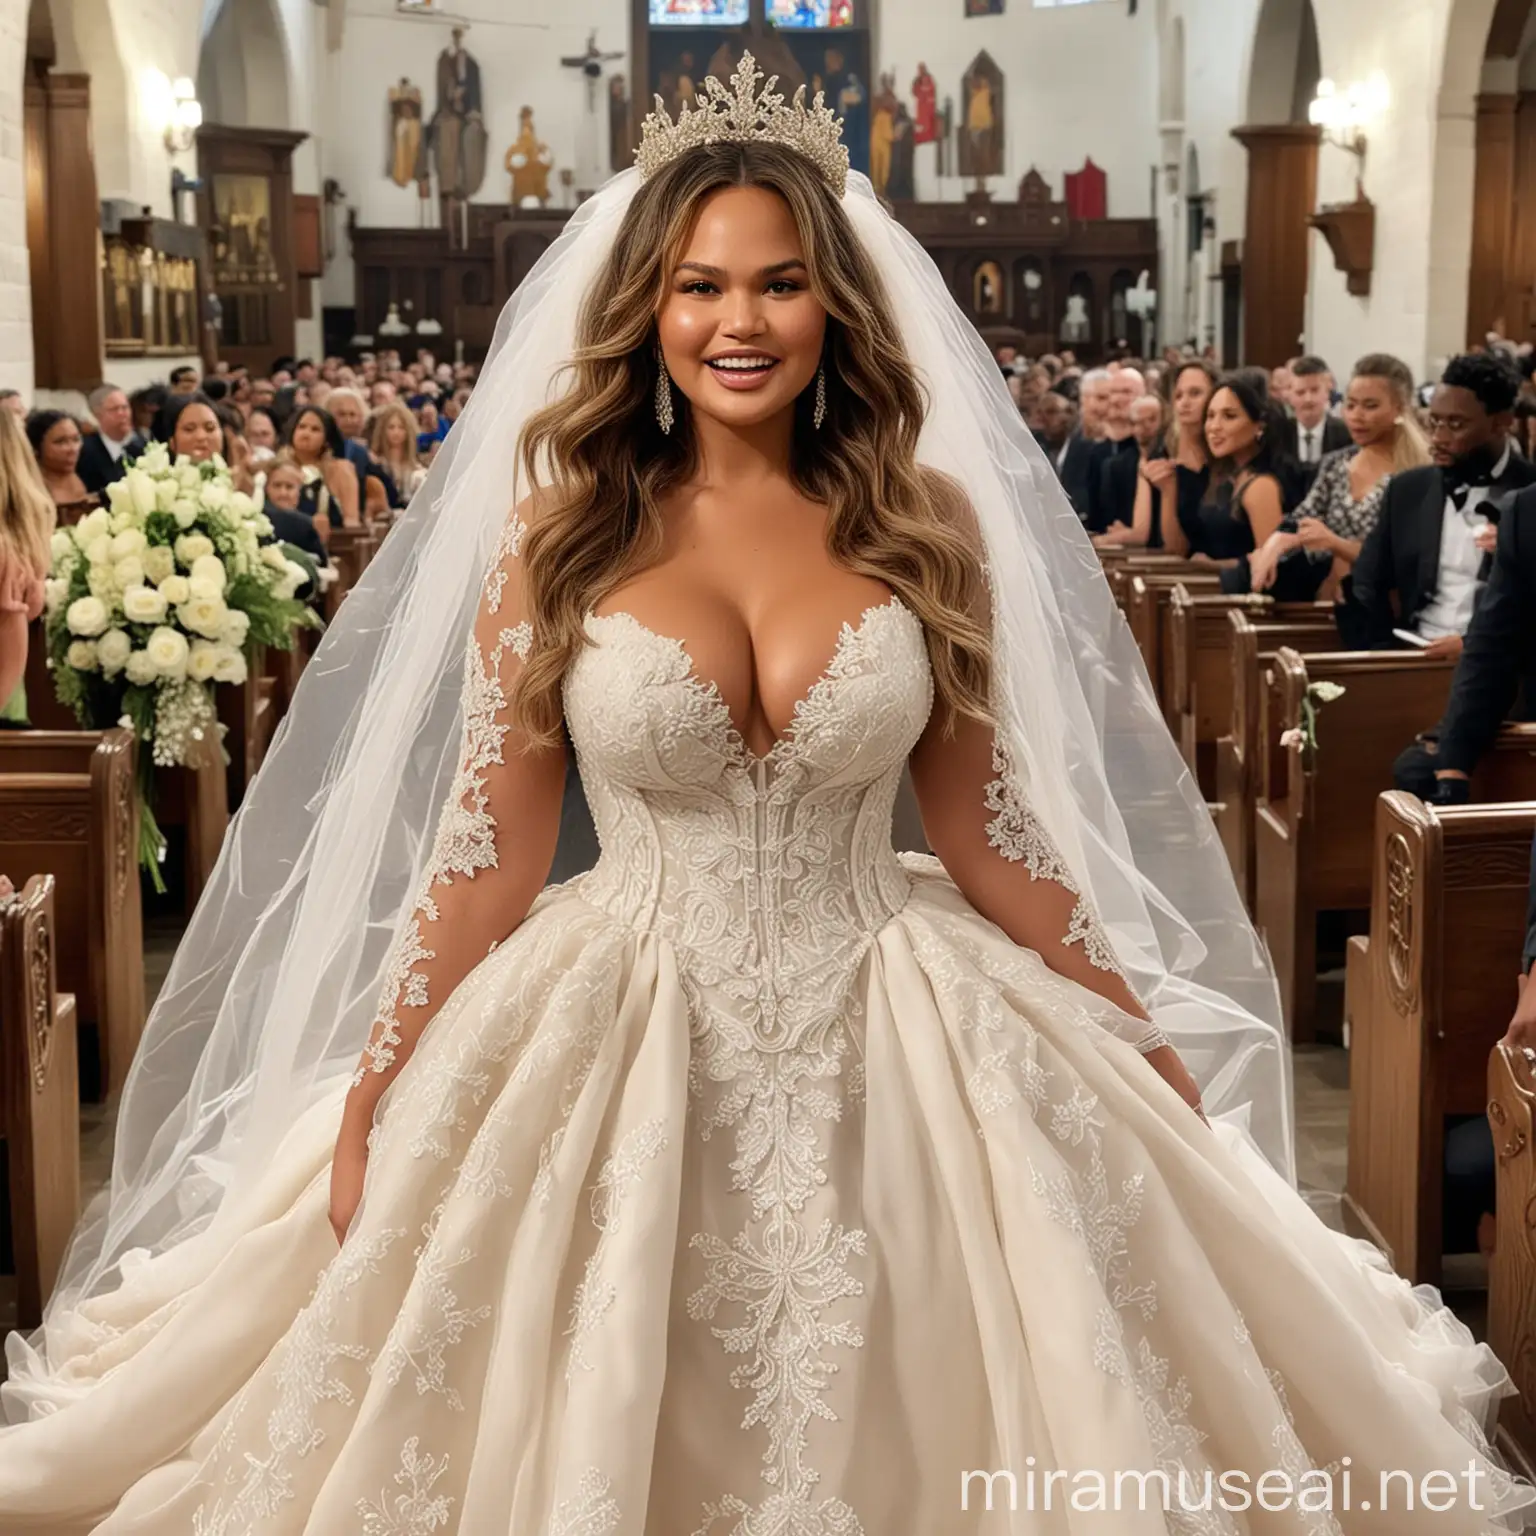 Chrissy Teigen wearing a wedding dress in church, bbw, big long kinky hair, showing massive cleavage, giant breasts